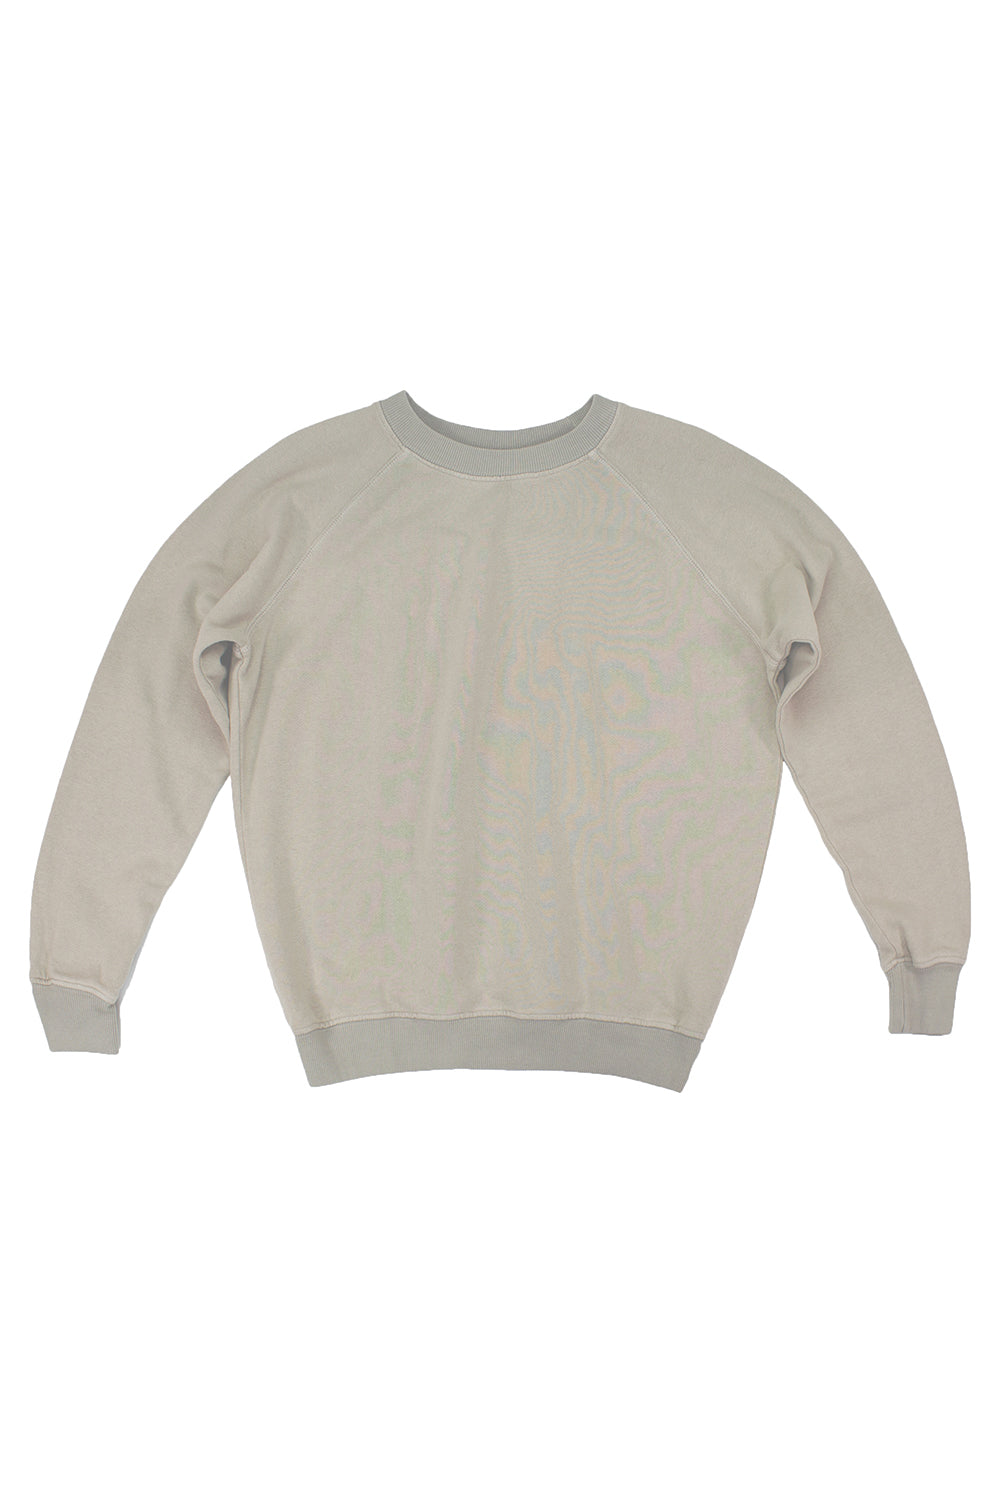 Bonfire Raglan Sweatshirt | Jungmaven Hemp Clothing & Accessories / Color: Canvas